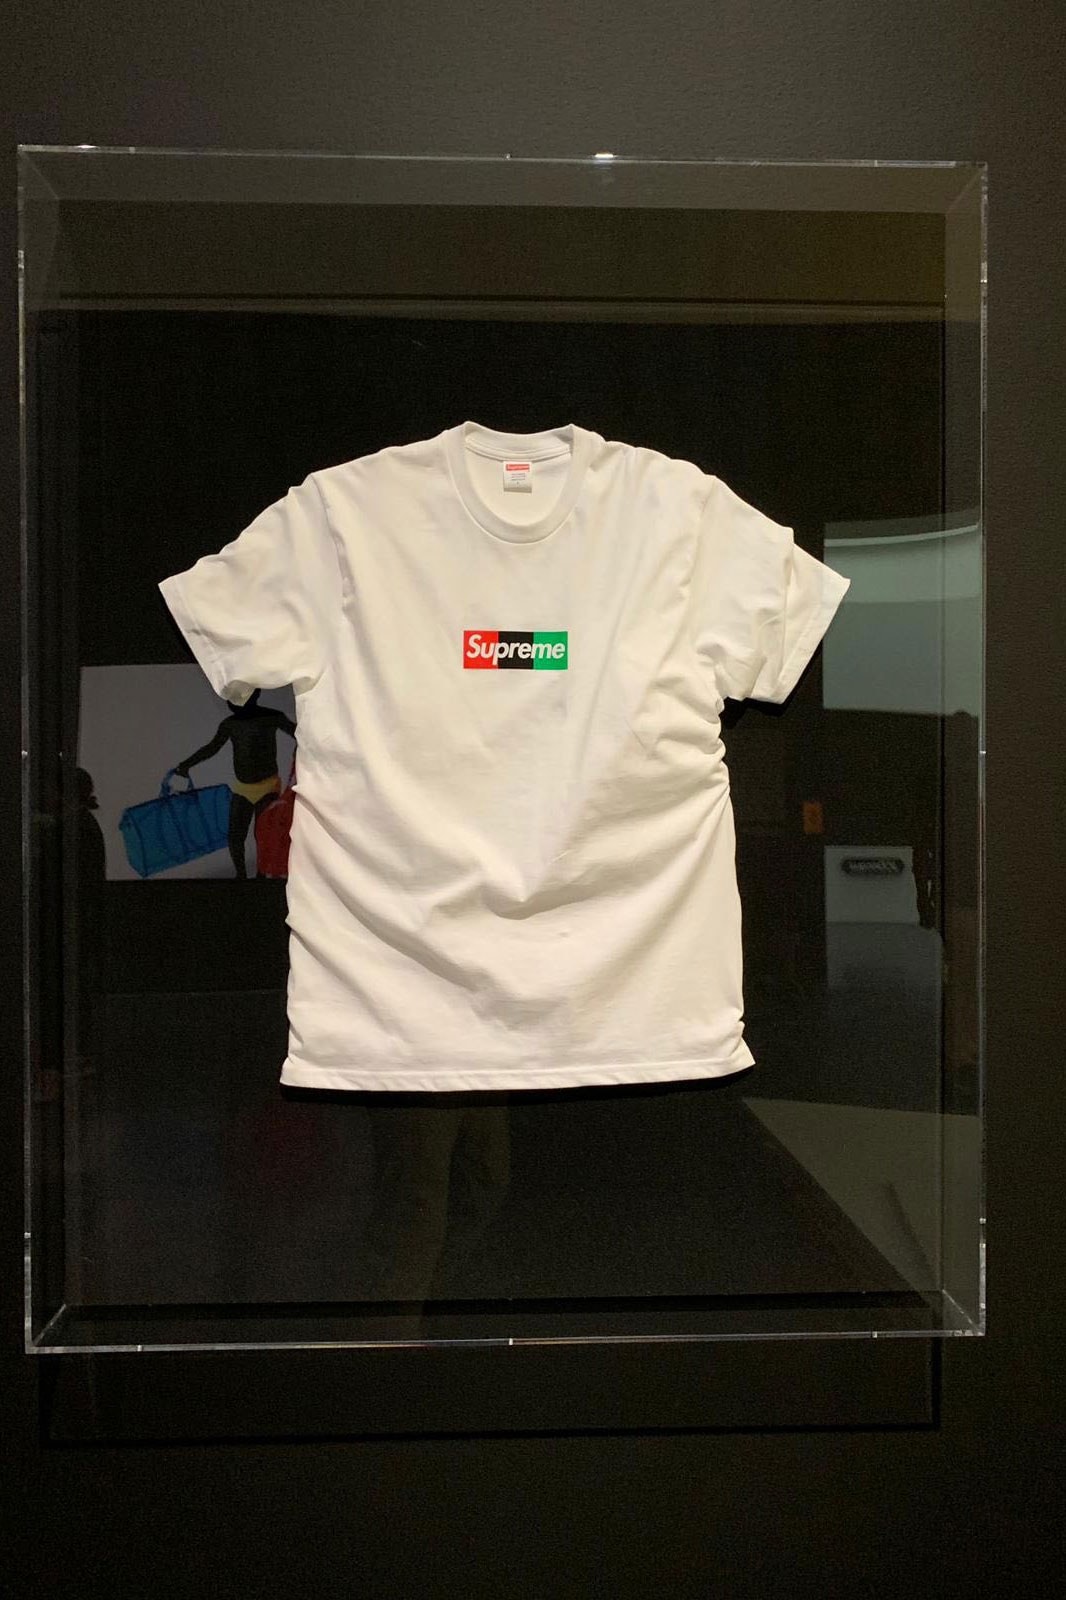 Supreme 全新 Box Logo T-Shirt 於 Virgil Abloh 個人藝術展覽現場亮相 